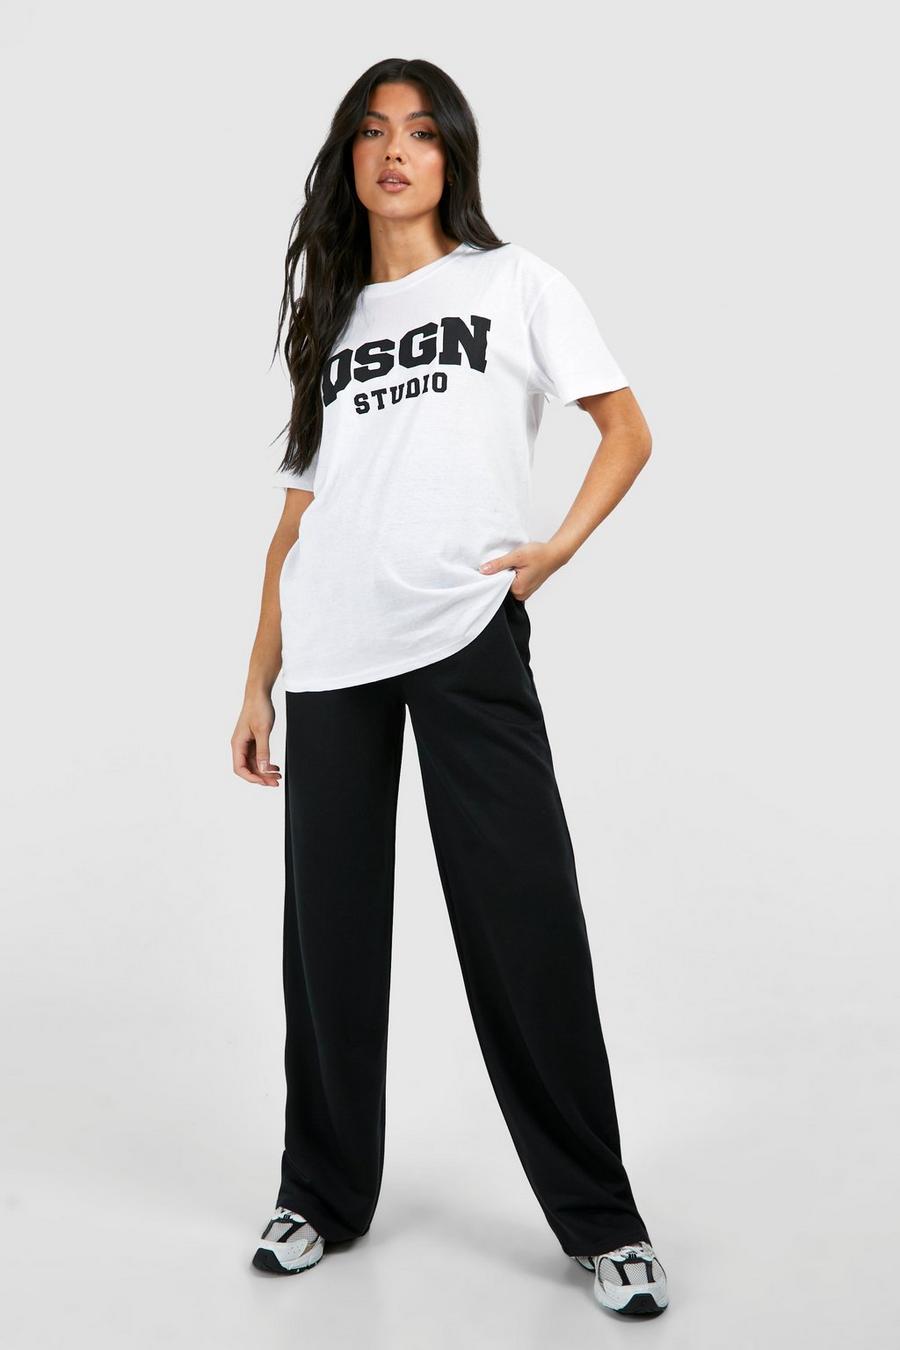 Chándal Premamá con camiseta Dsgn Studio, Black image number 1